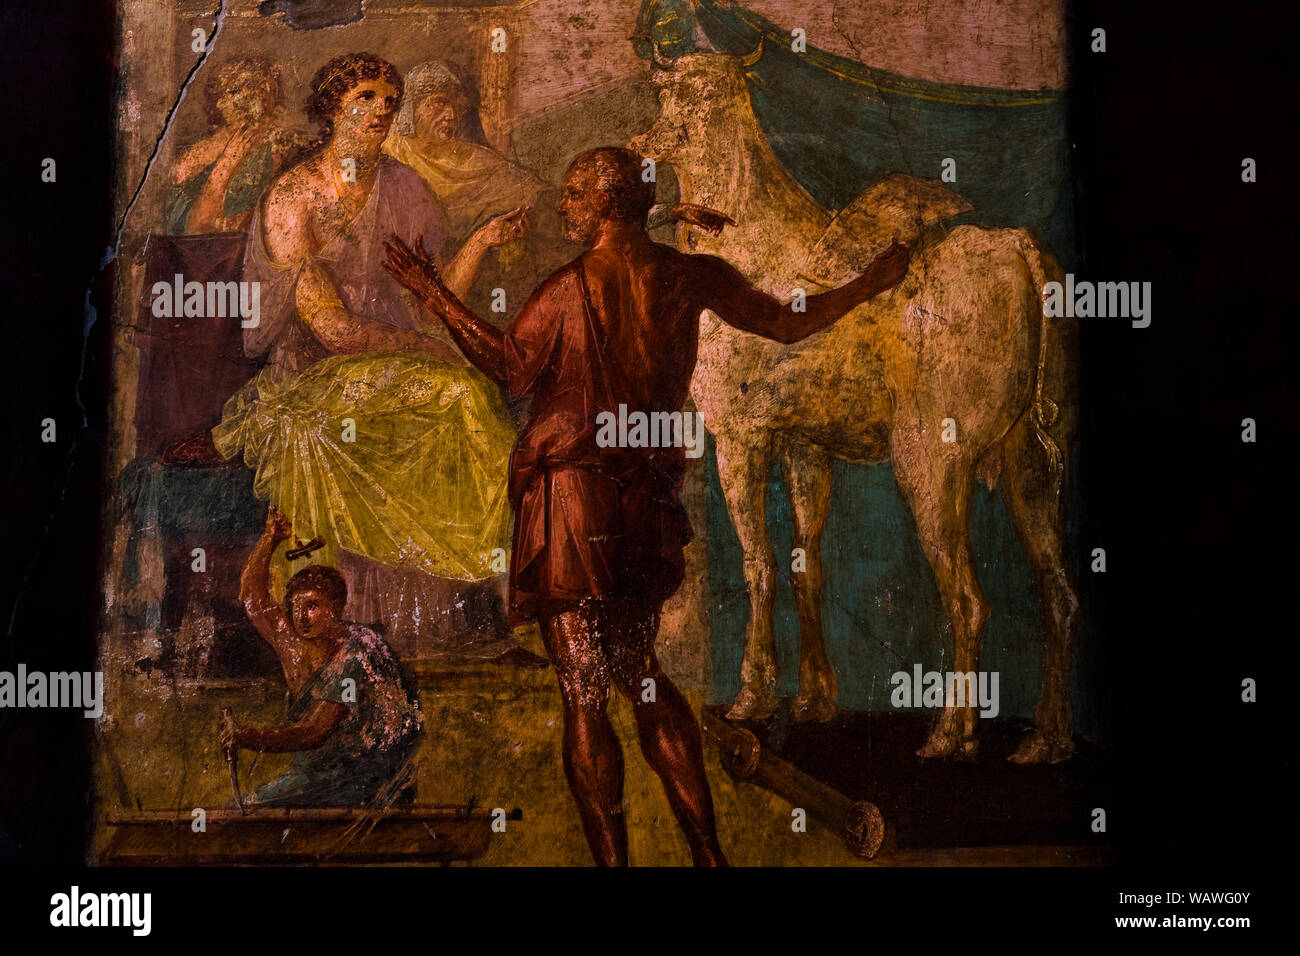 Pompeii, Italy Roman domus house of Vettii fresco painting. North wall triclinium mythological scene depicting Daedalus and Pasiphae. Stock Photo